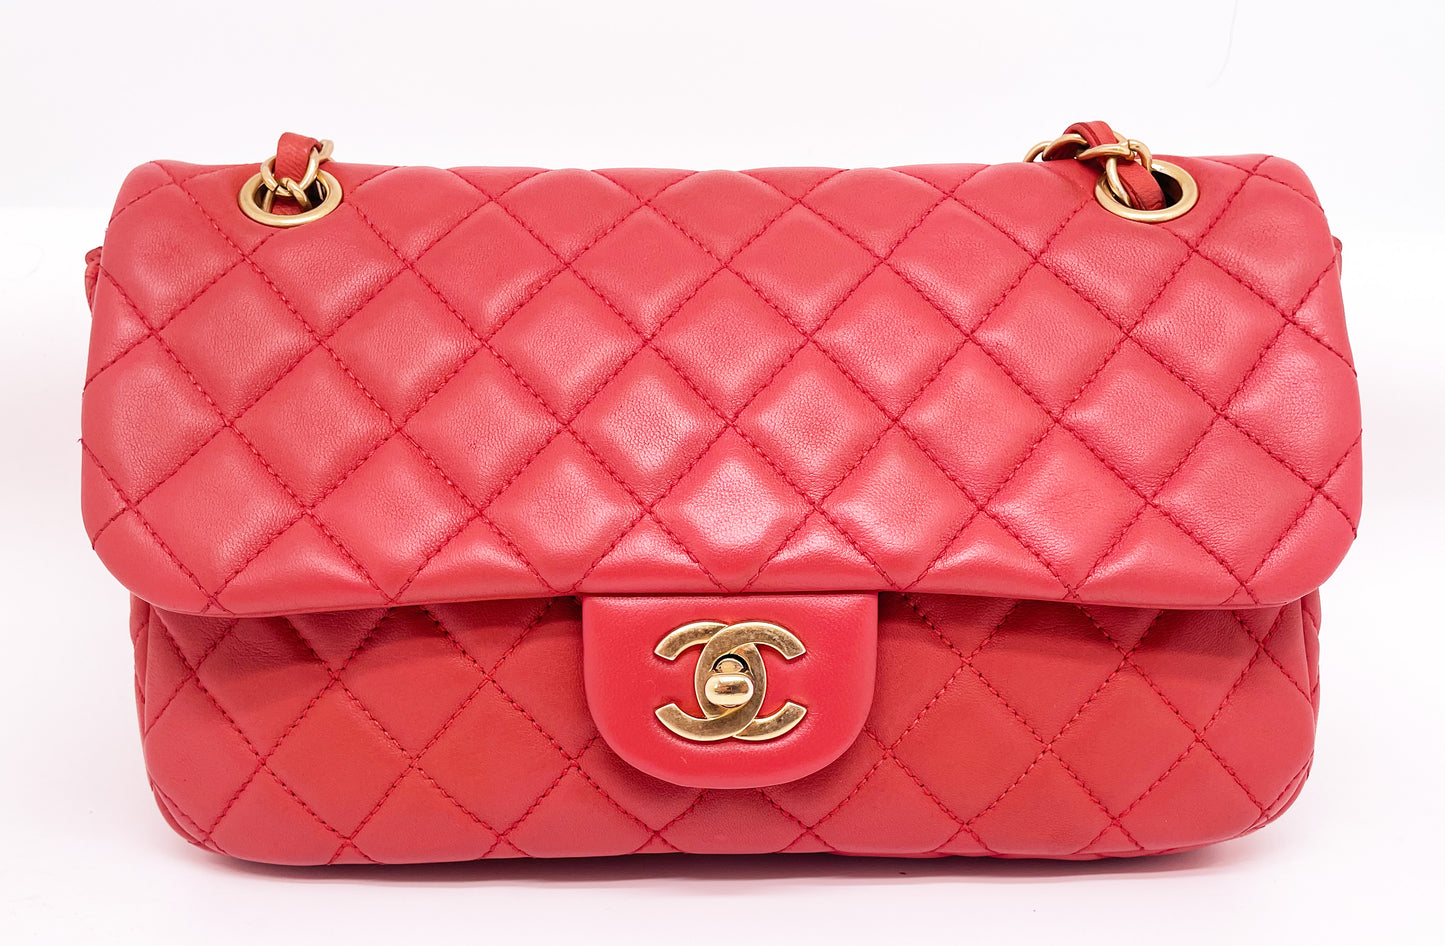 Magnifique Sac CHANEL en cuir Valentine Charm Strap Limited Edition Simple Rabat en rose